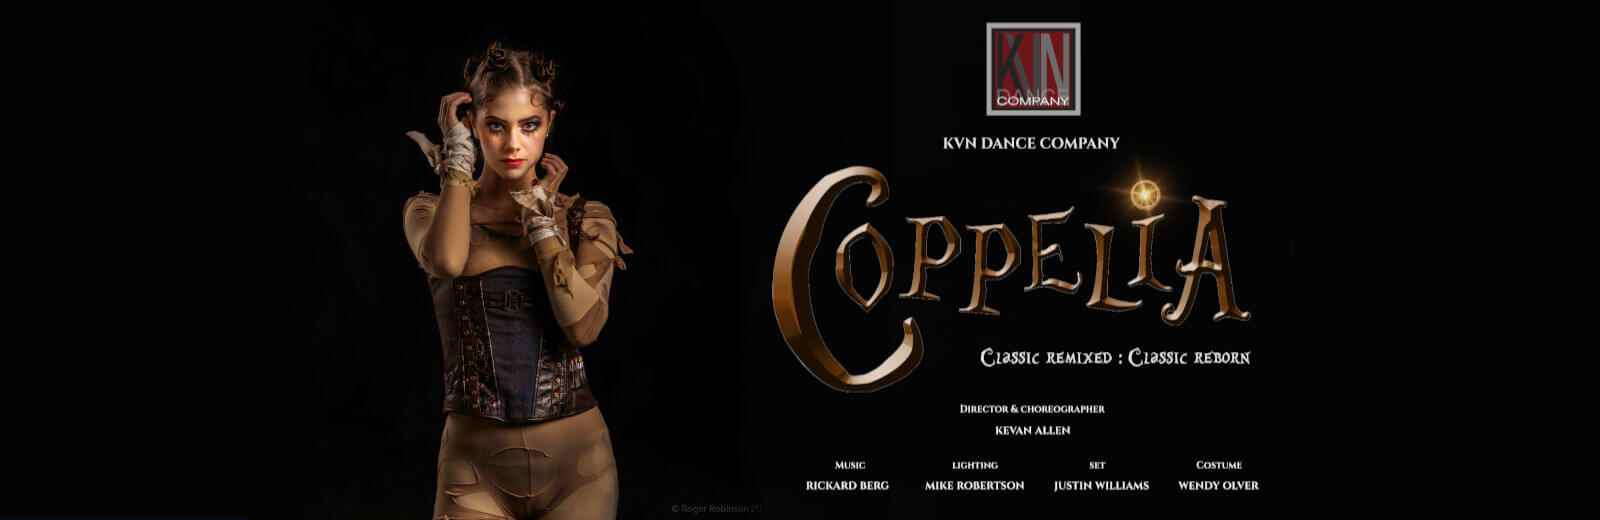 KVN Dance Company Presents - Coppelia